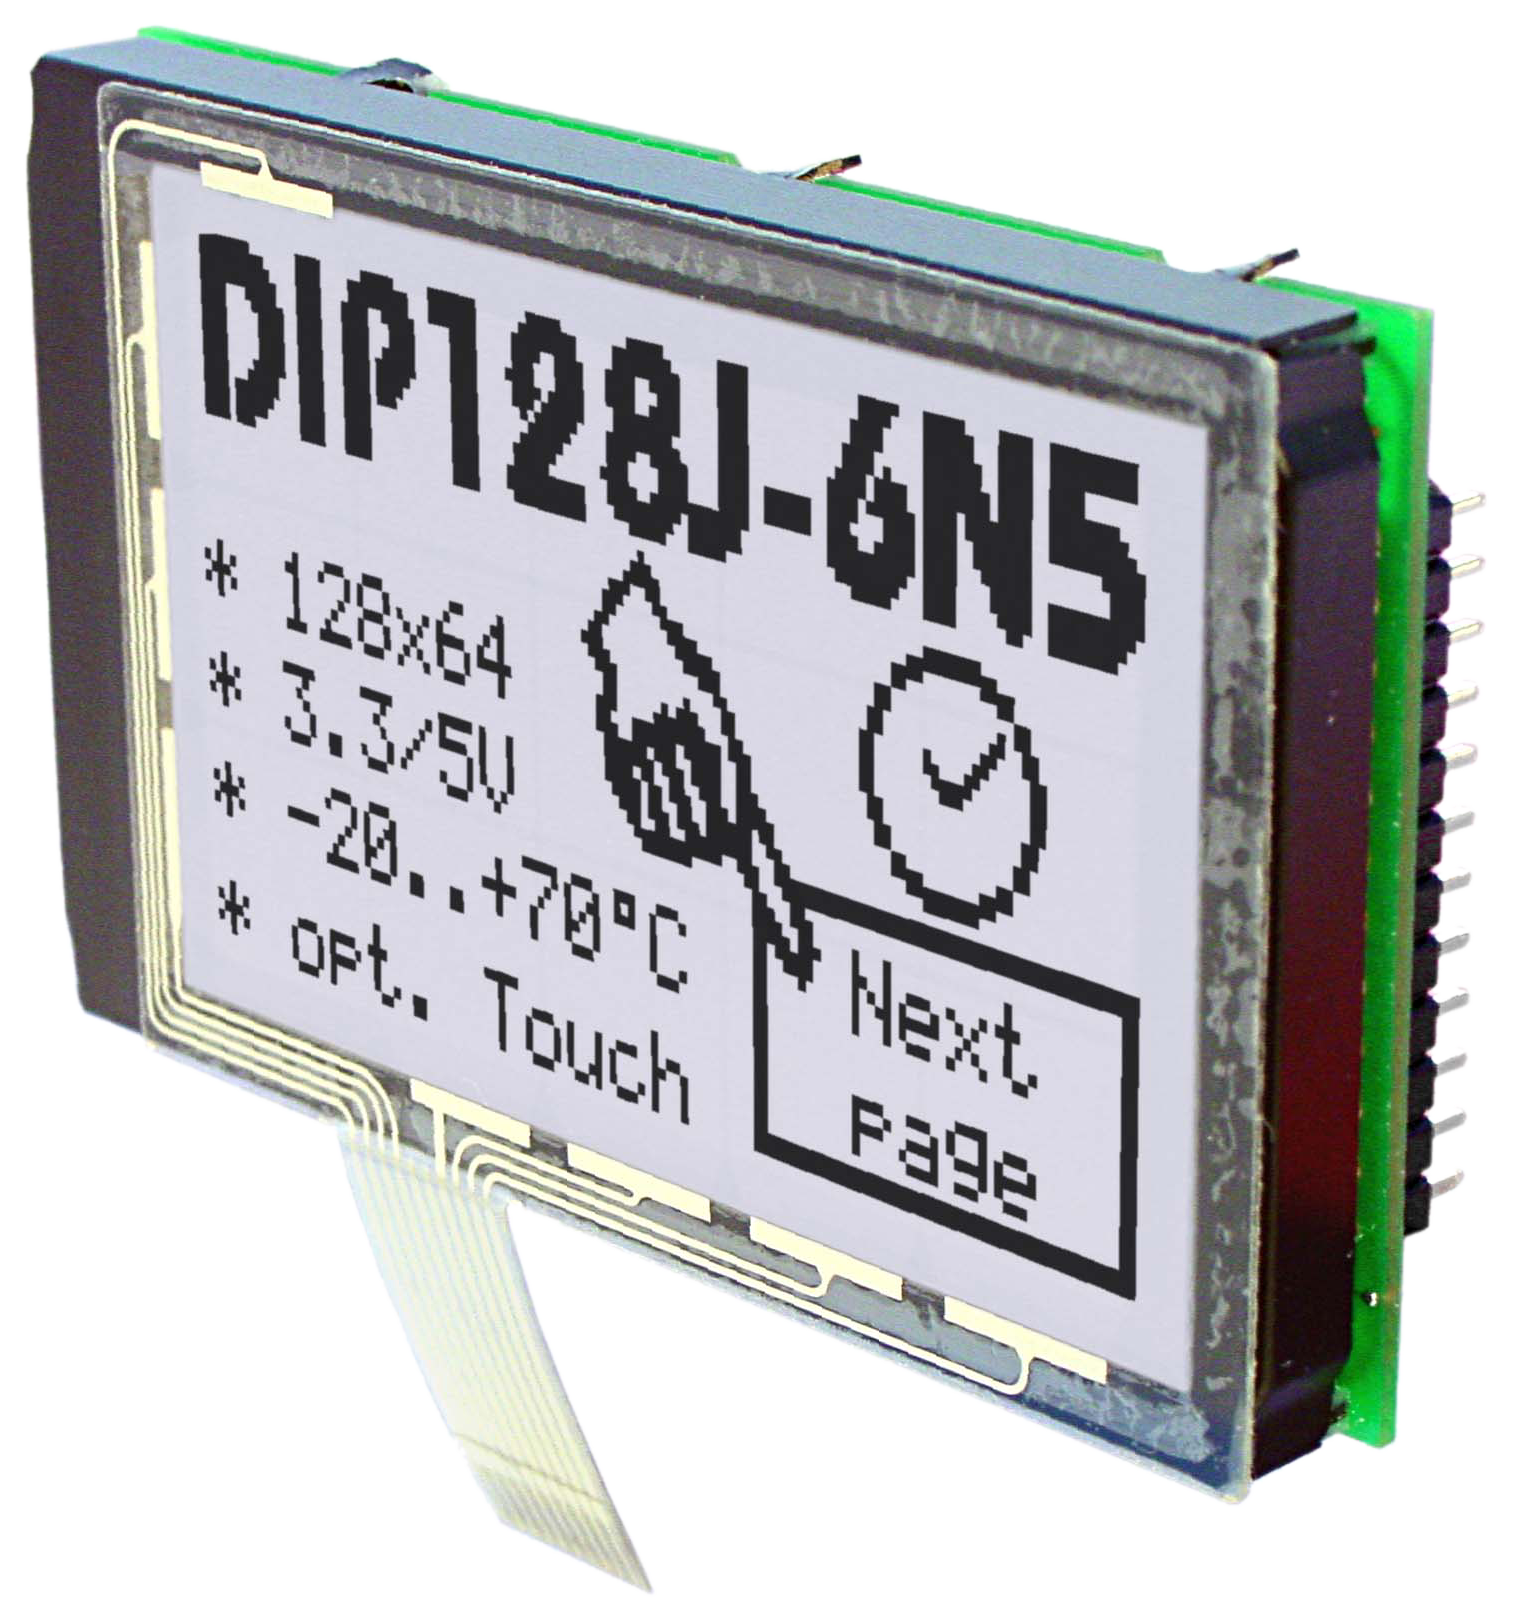 Oled Displays in Chip on Board (COB) TEchnik, hier EA DIP128 als Grafikdisplay mit 128x64 Pixeln